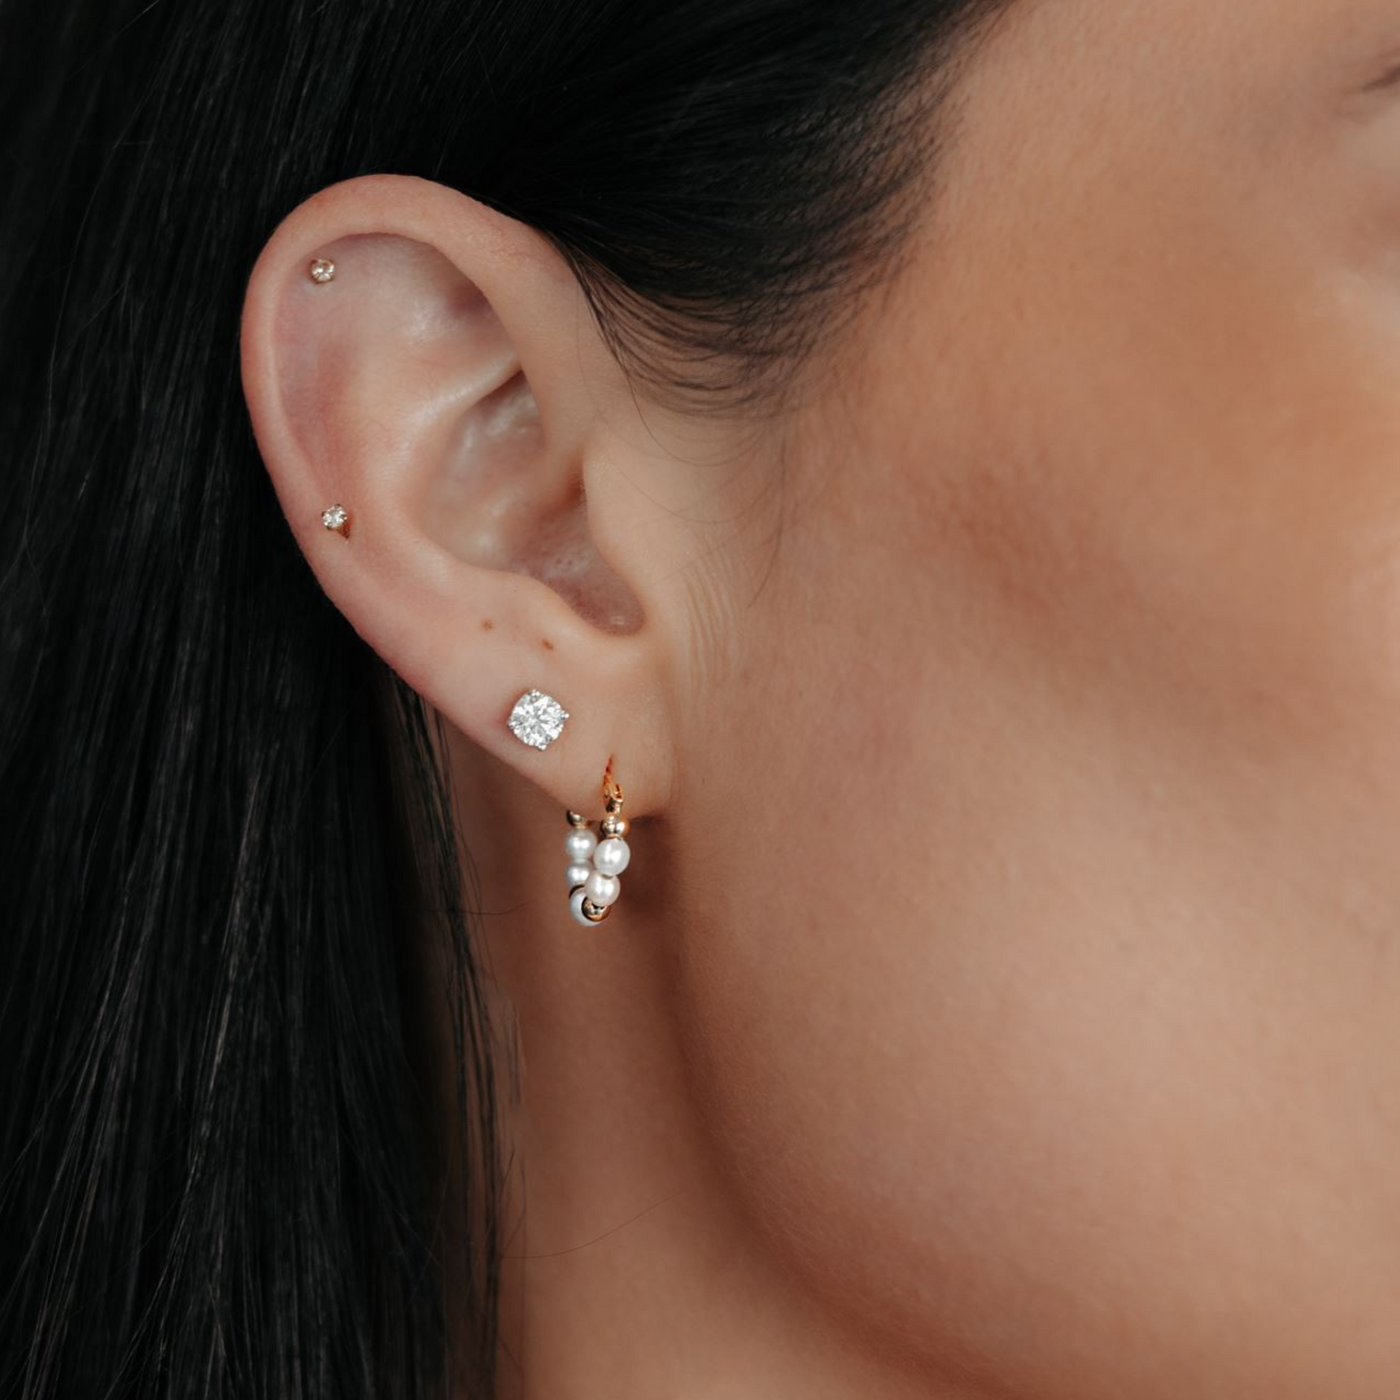 pearl and gold bead huggie earrings